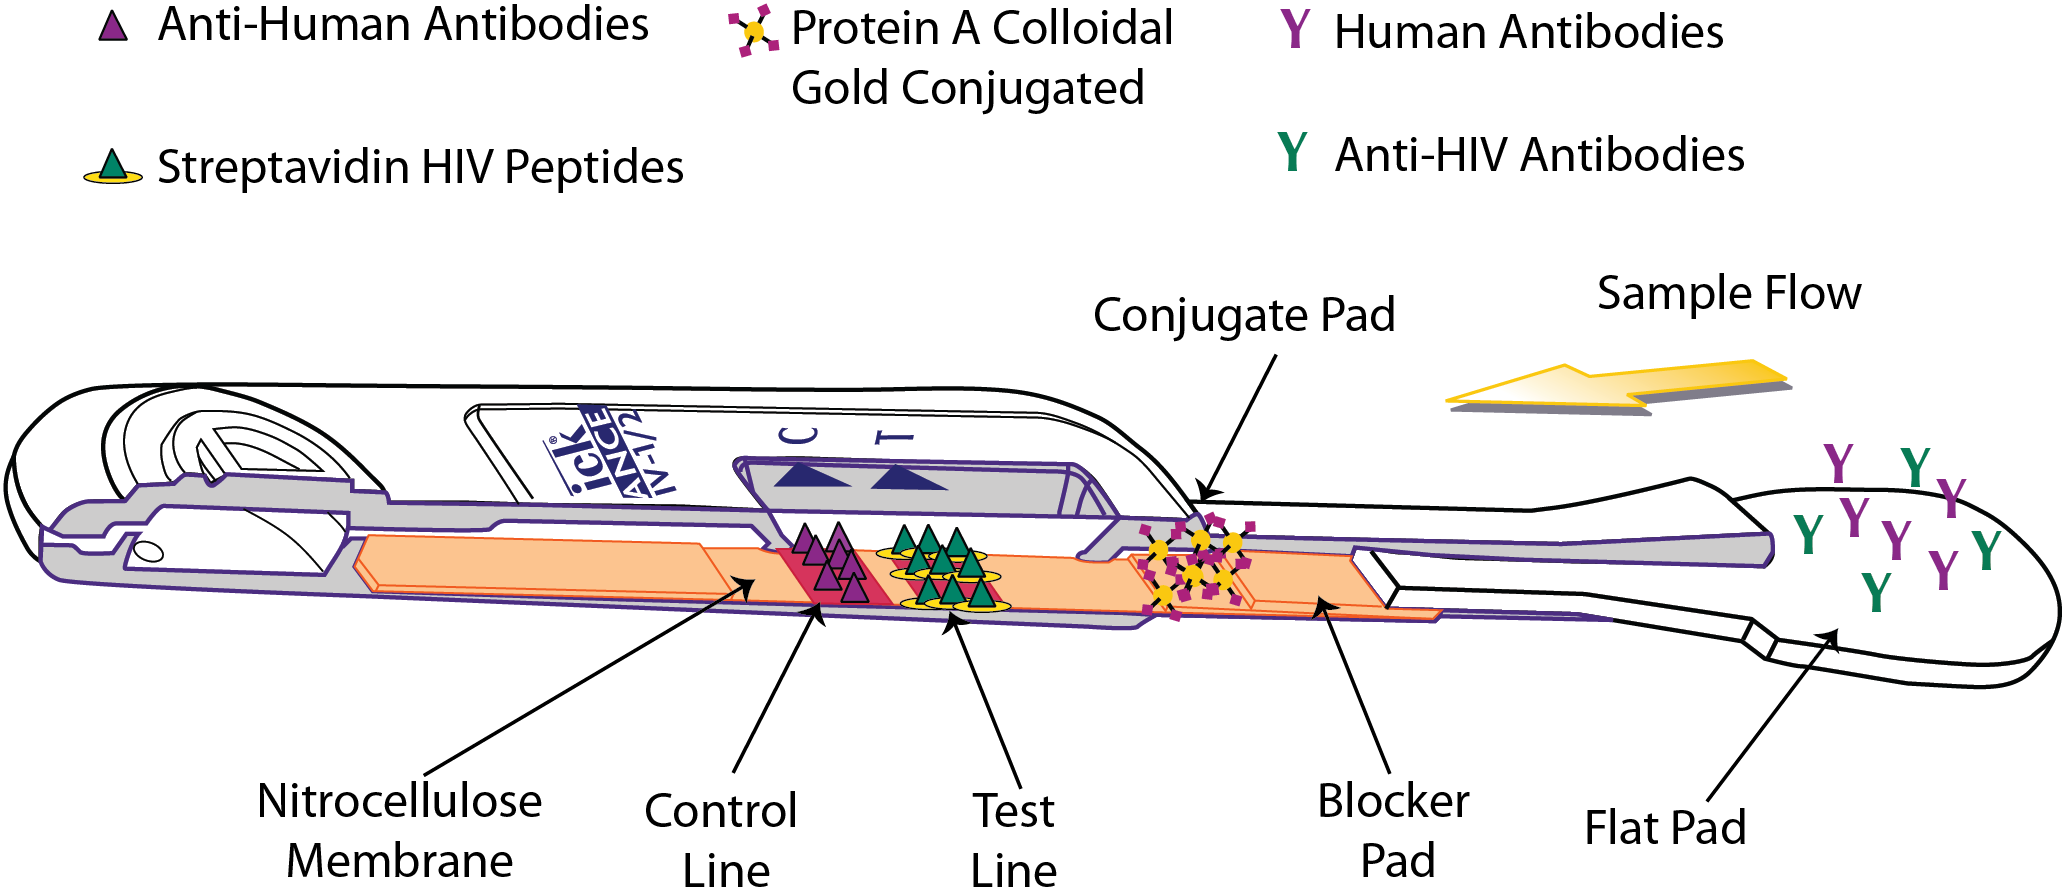 Human Anti Hiv Igm Detection By The Oraquick Advance Rapid Hiv 1 2 Antibody Test Peerj